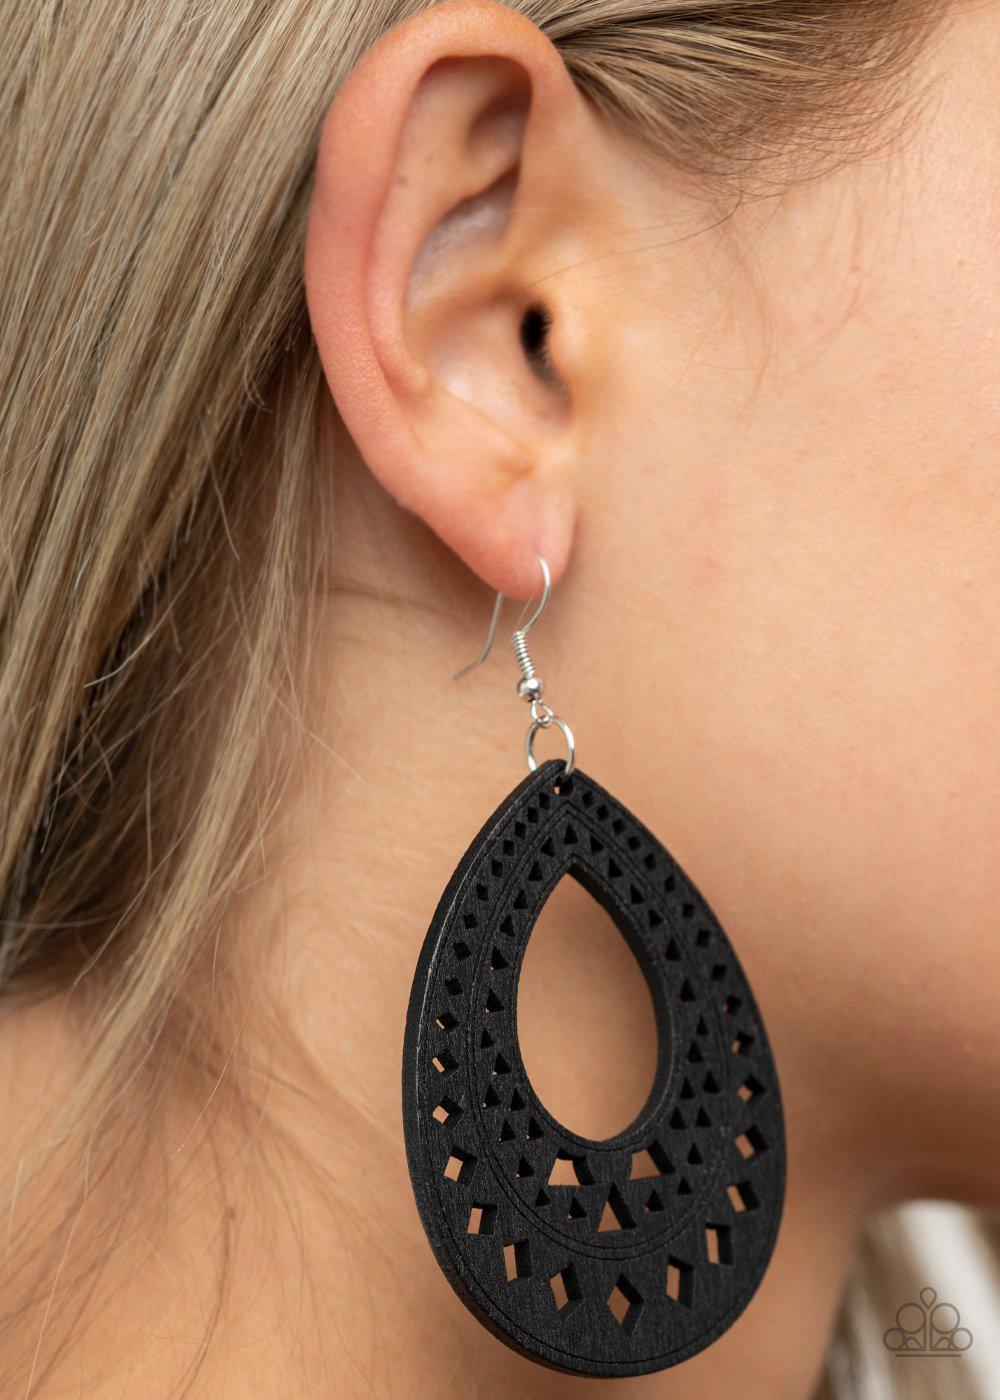 Belize Beauty Black Wood Earrings - Paparazzi Accessories-CarasShop.com - $5 Jewelry by Cara Jewels